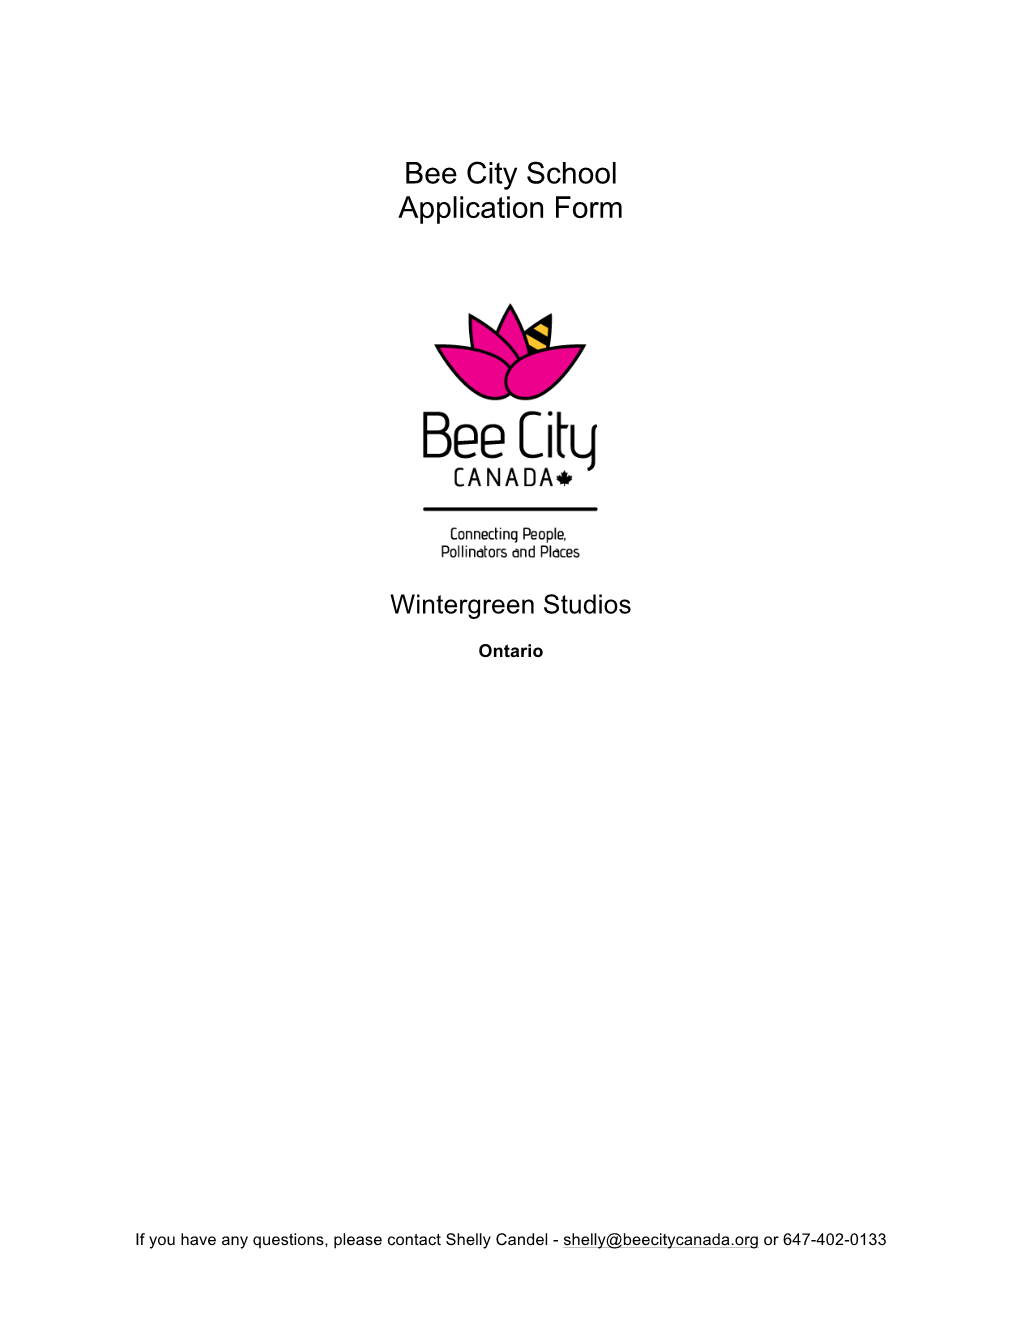 Bee City School Application Form